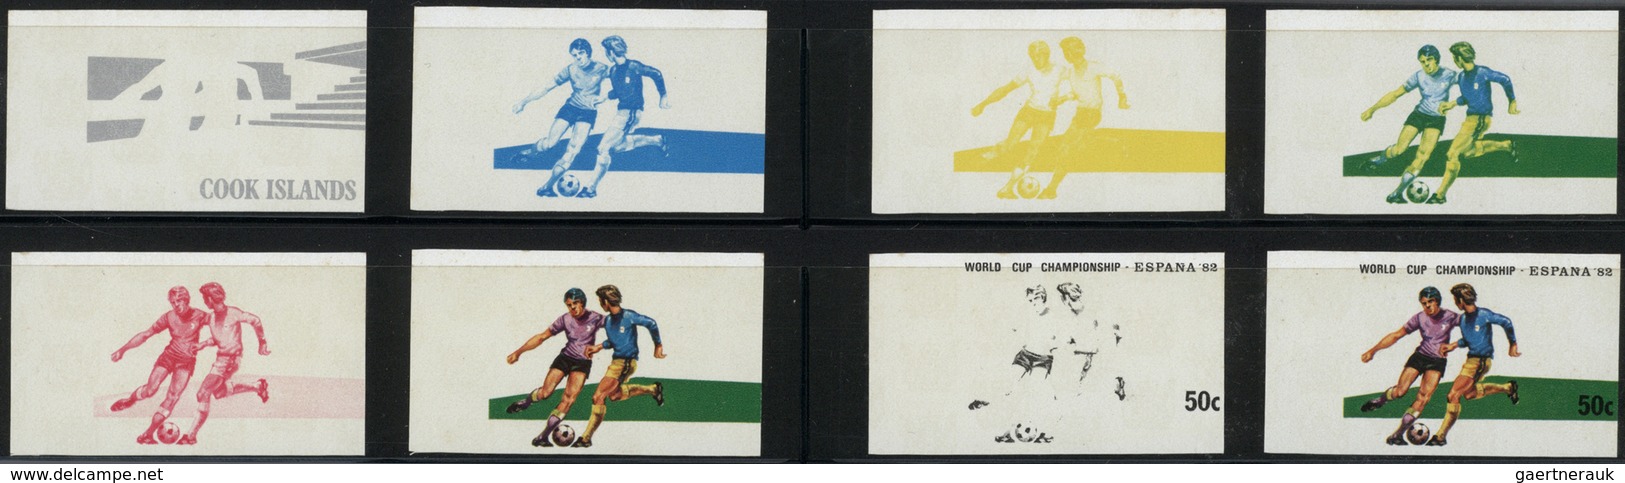 10969 Thematik: Sport-Fußball / sport-soccer, football: 1981, SOCCER WORLD CUP CHAMPIONSHIP ESPANA '82 - 6